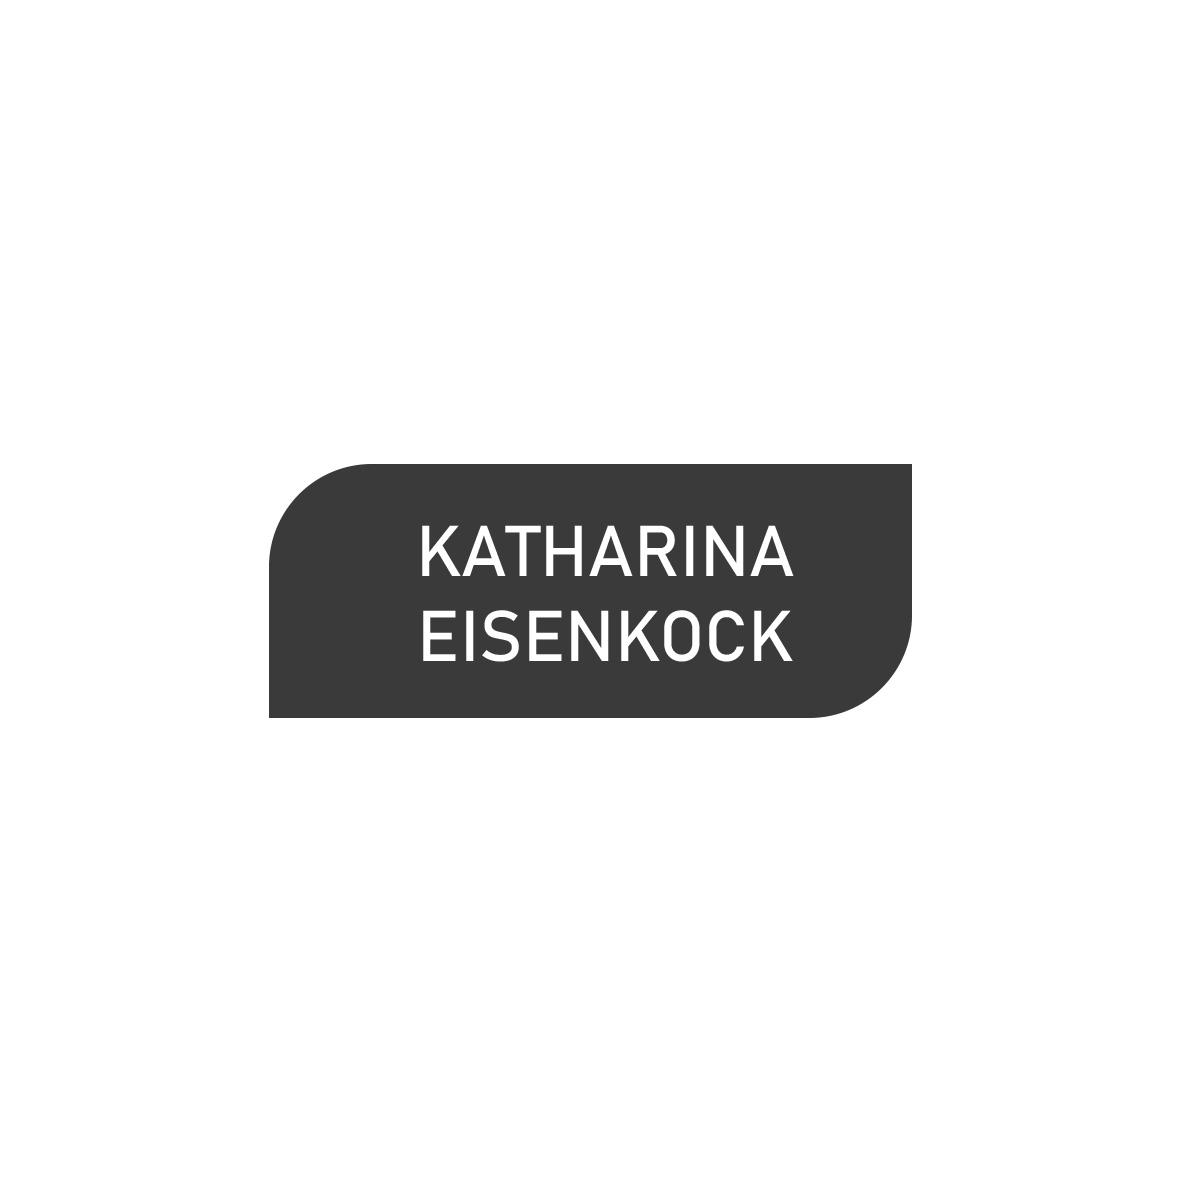 KATHARINA EISENKOCK